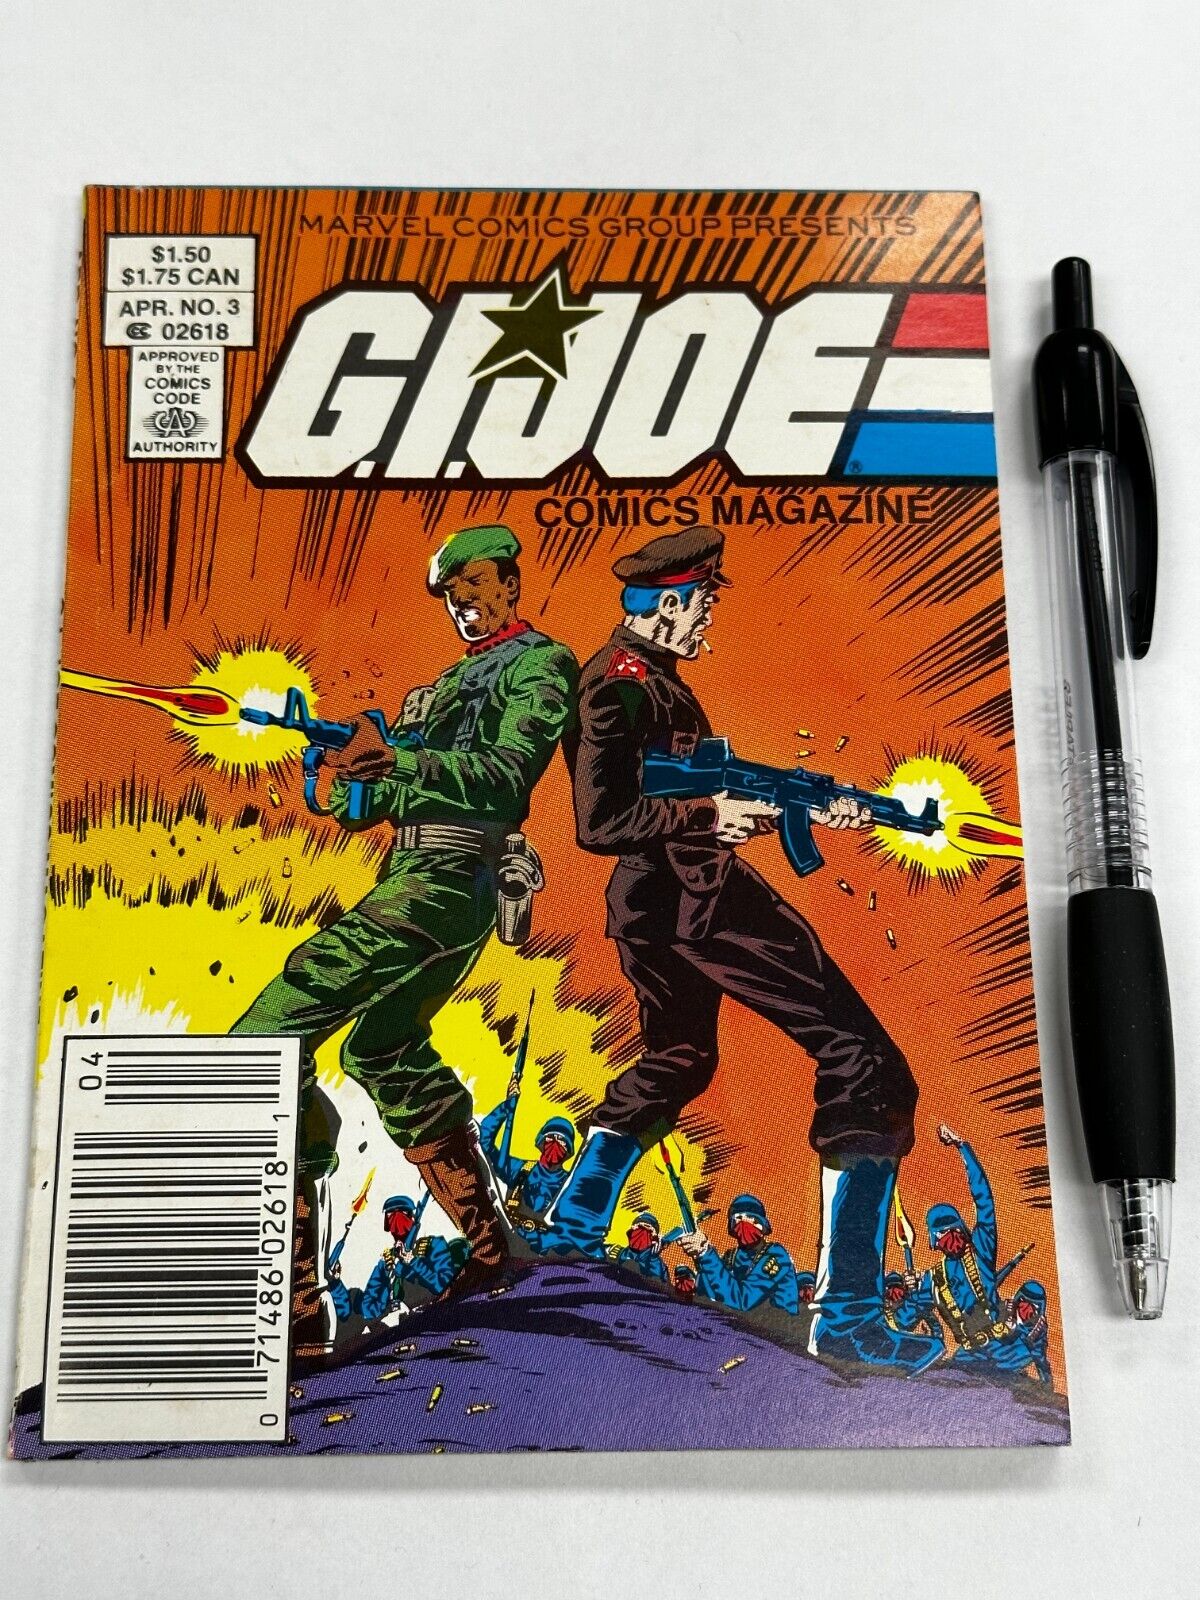 VINTAGE 1987 APR #3 G.I. Joe MINI Comic, Magazine Digest, Marvel Size 6.5" x 5"